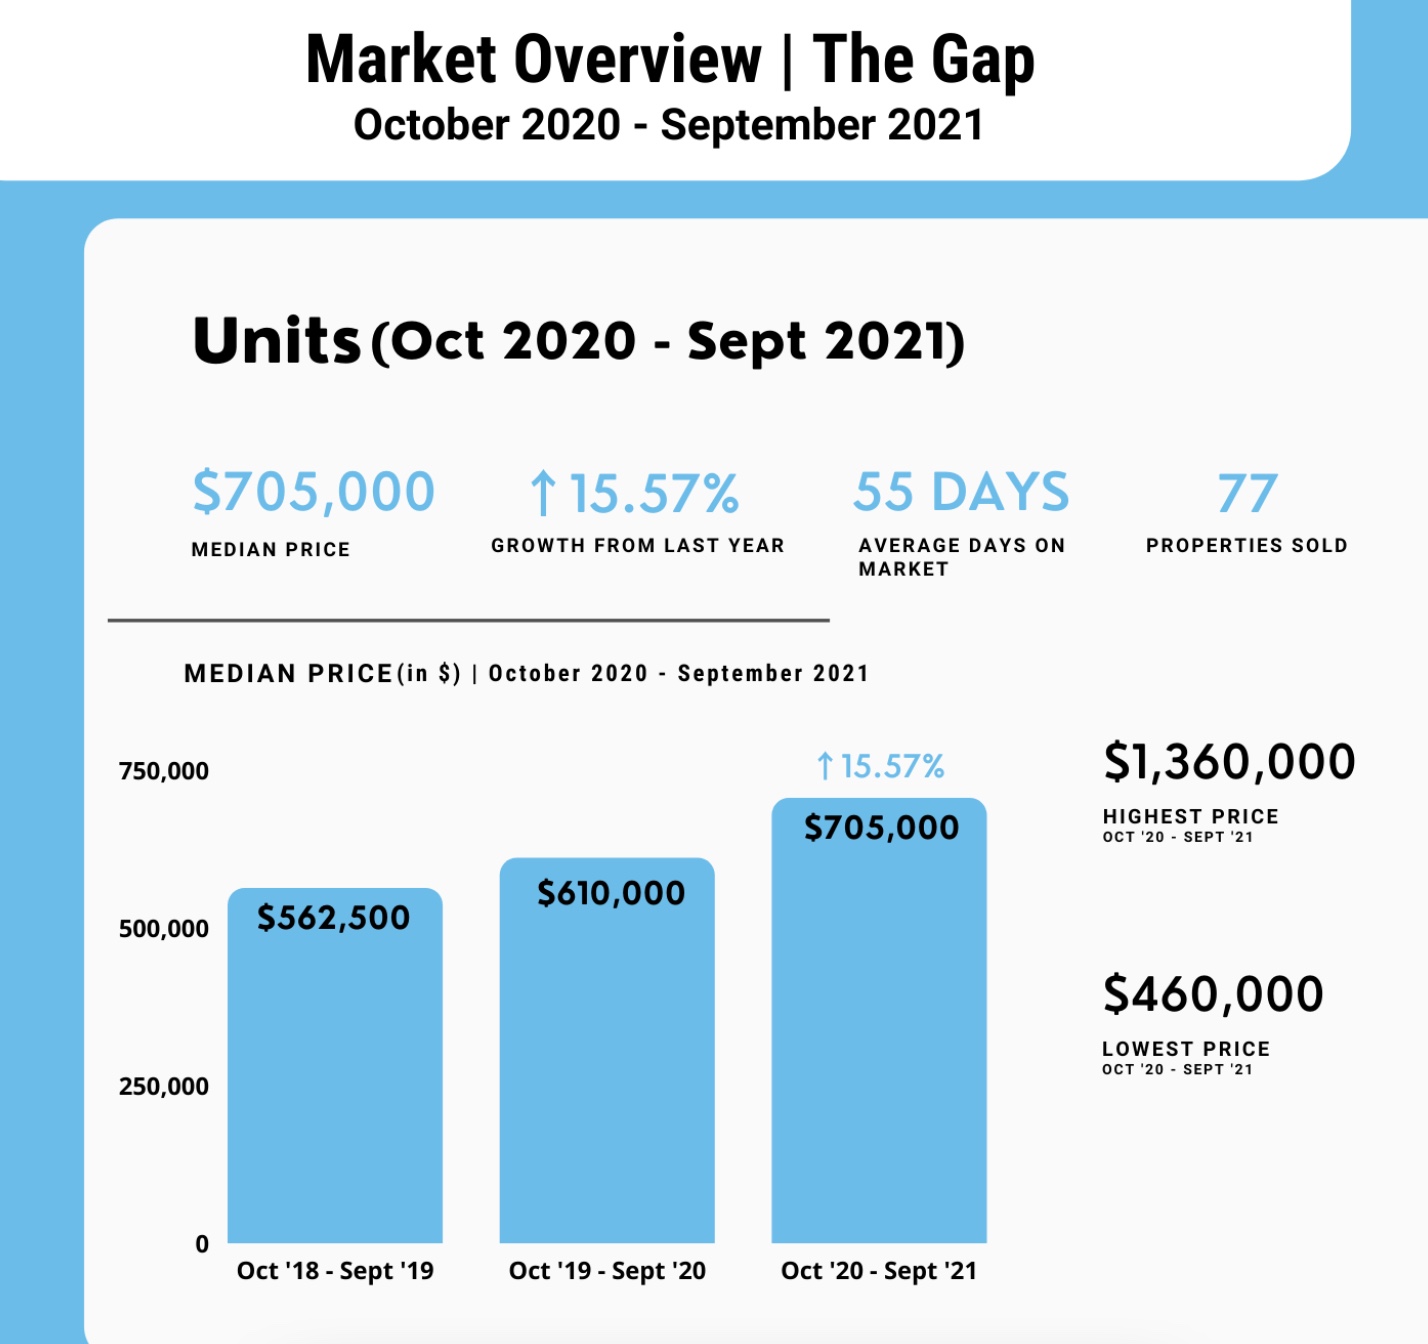 The Gap Median Unit Price Growth